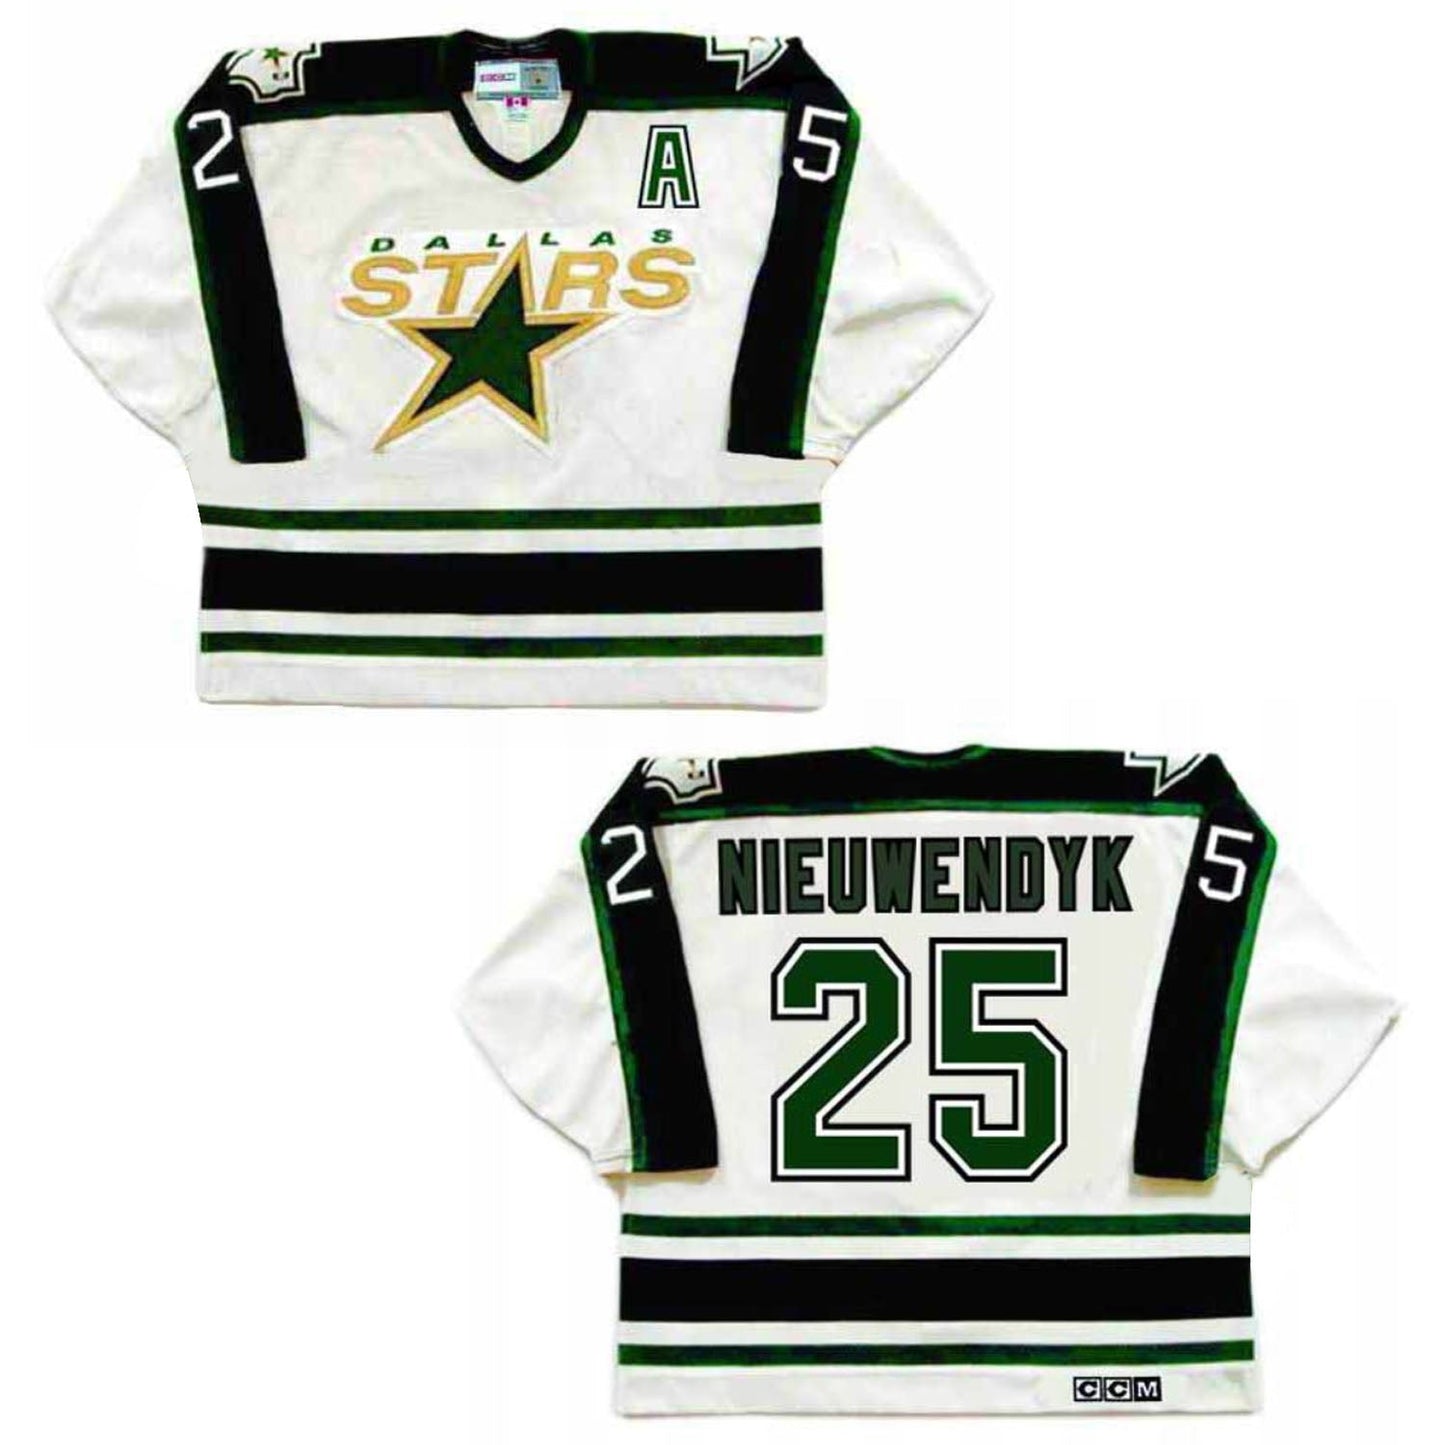 NHL Joe Nieuwendyk Dallas Stars 25 Jersey